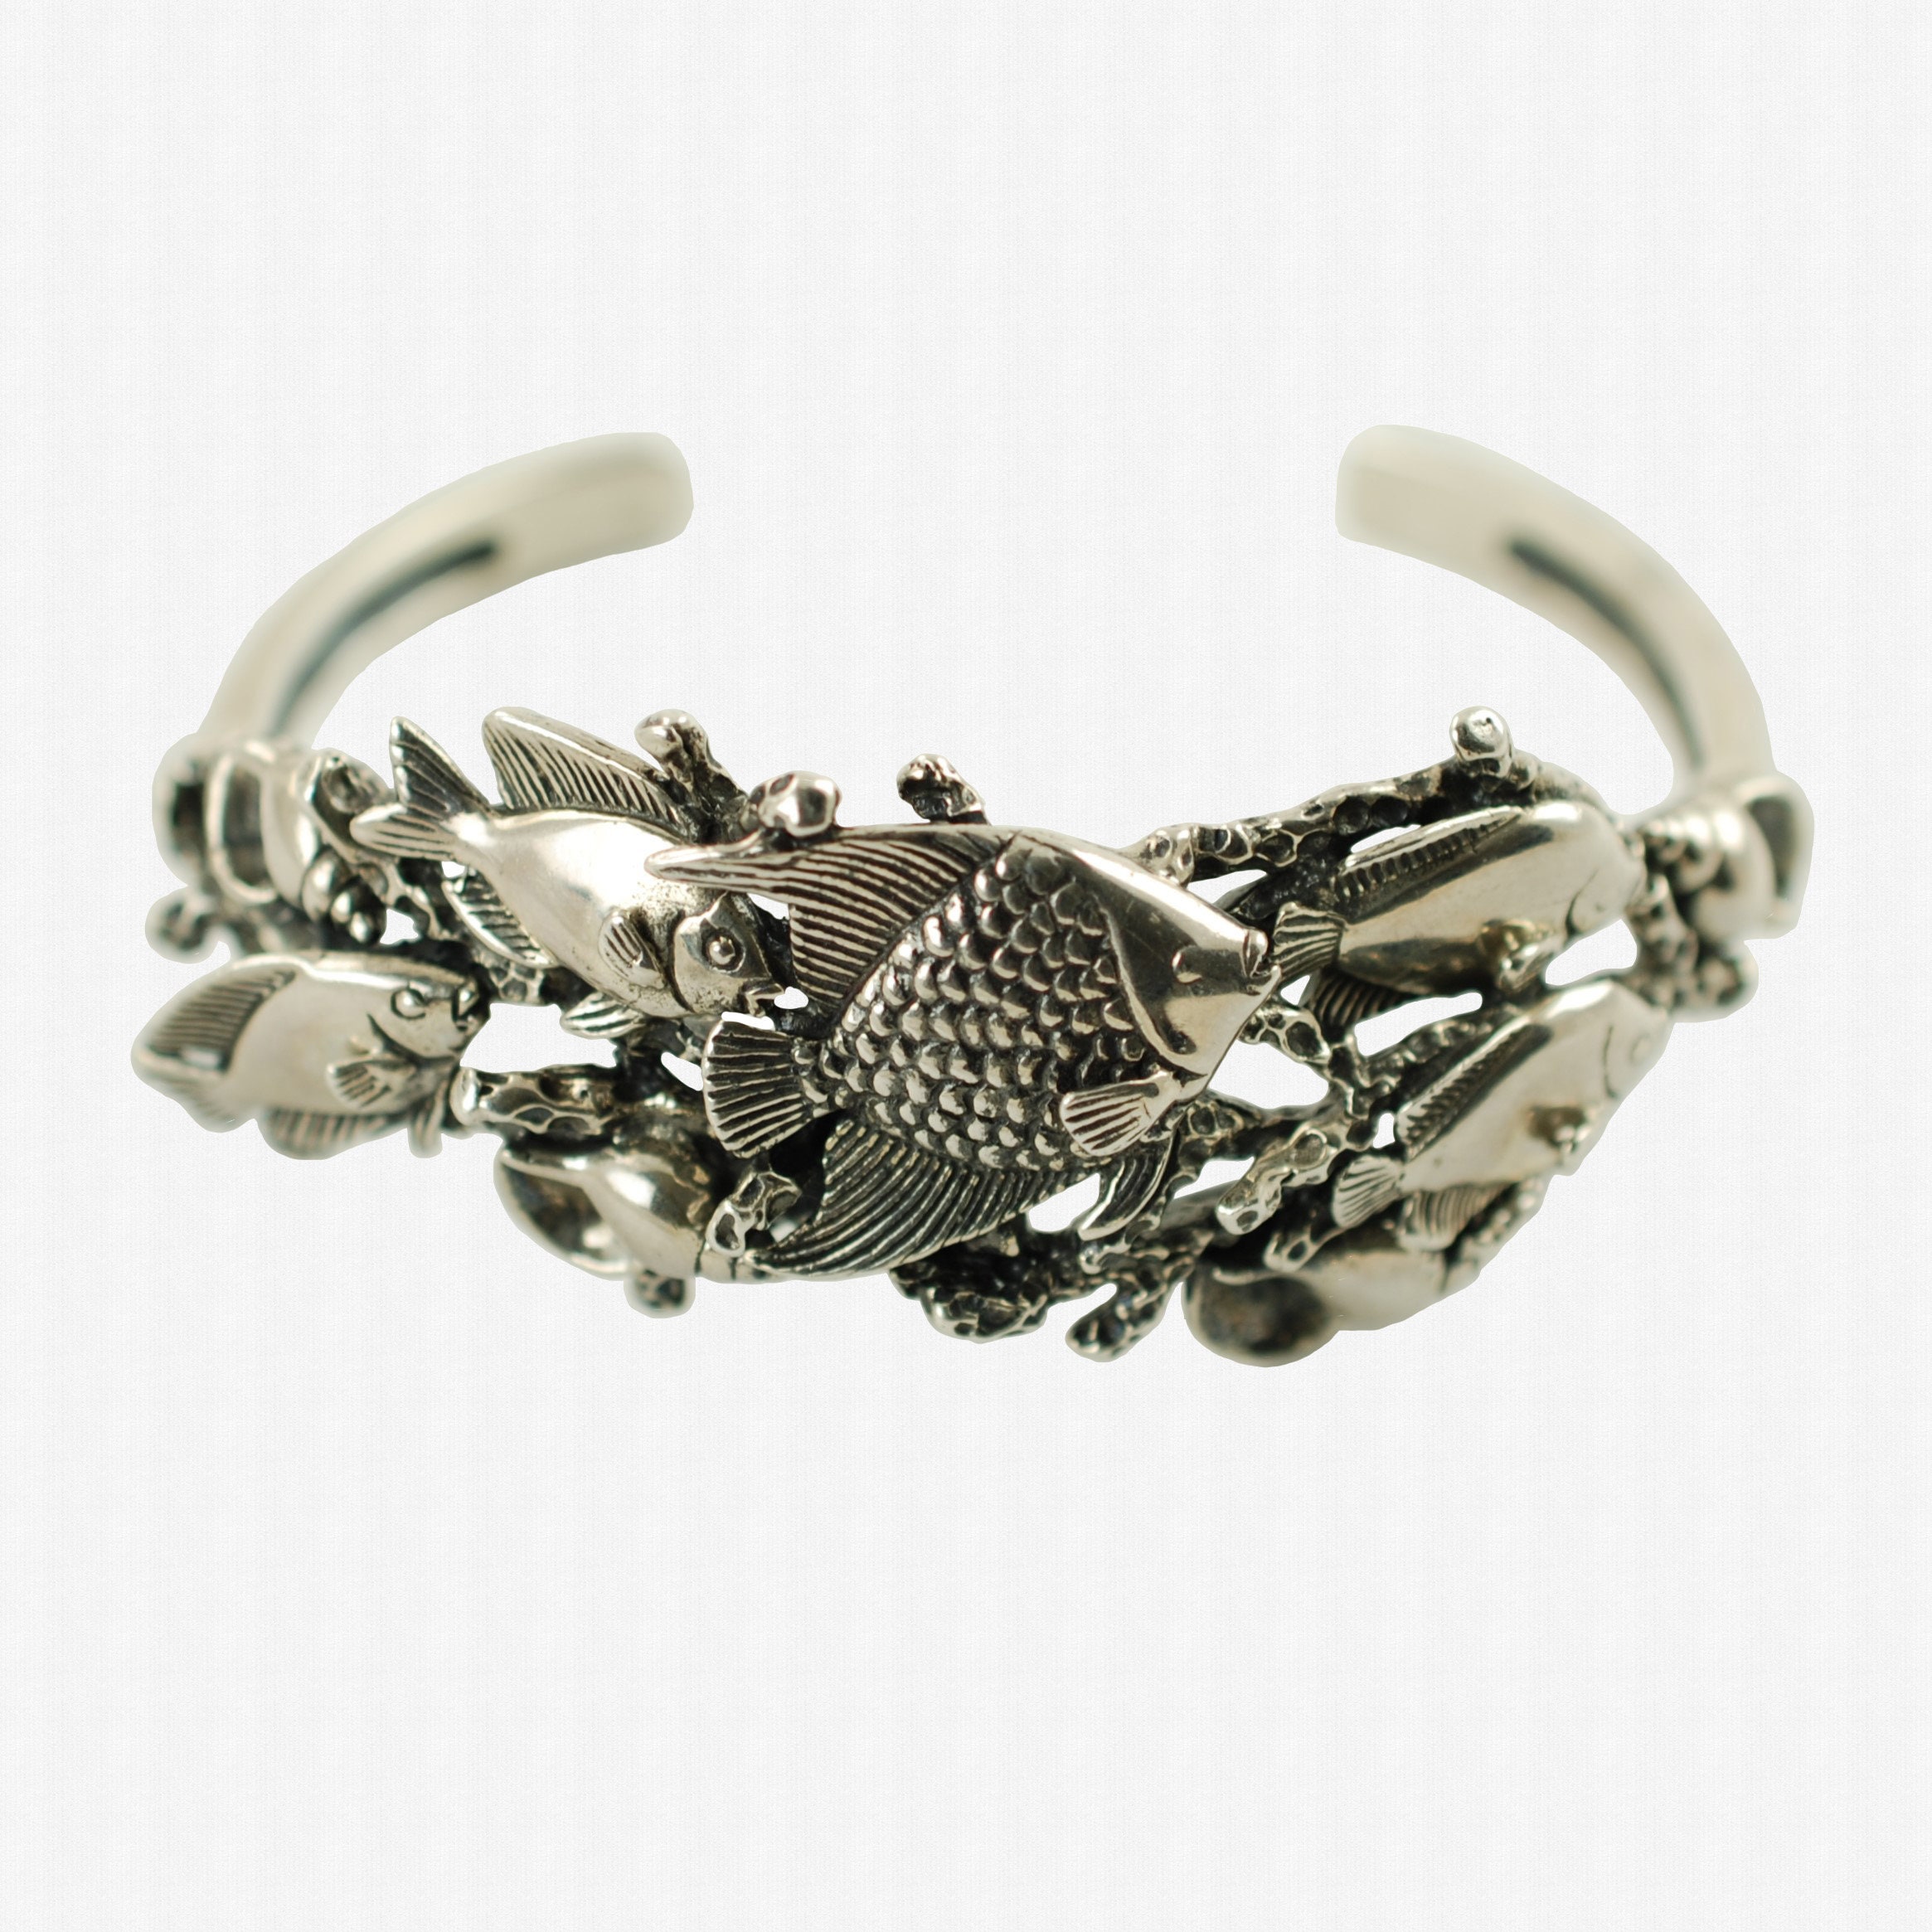 KABANA-sterling silver, Sea life bangle bracelet. | eBay